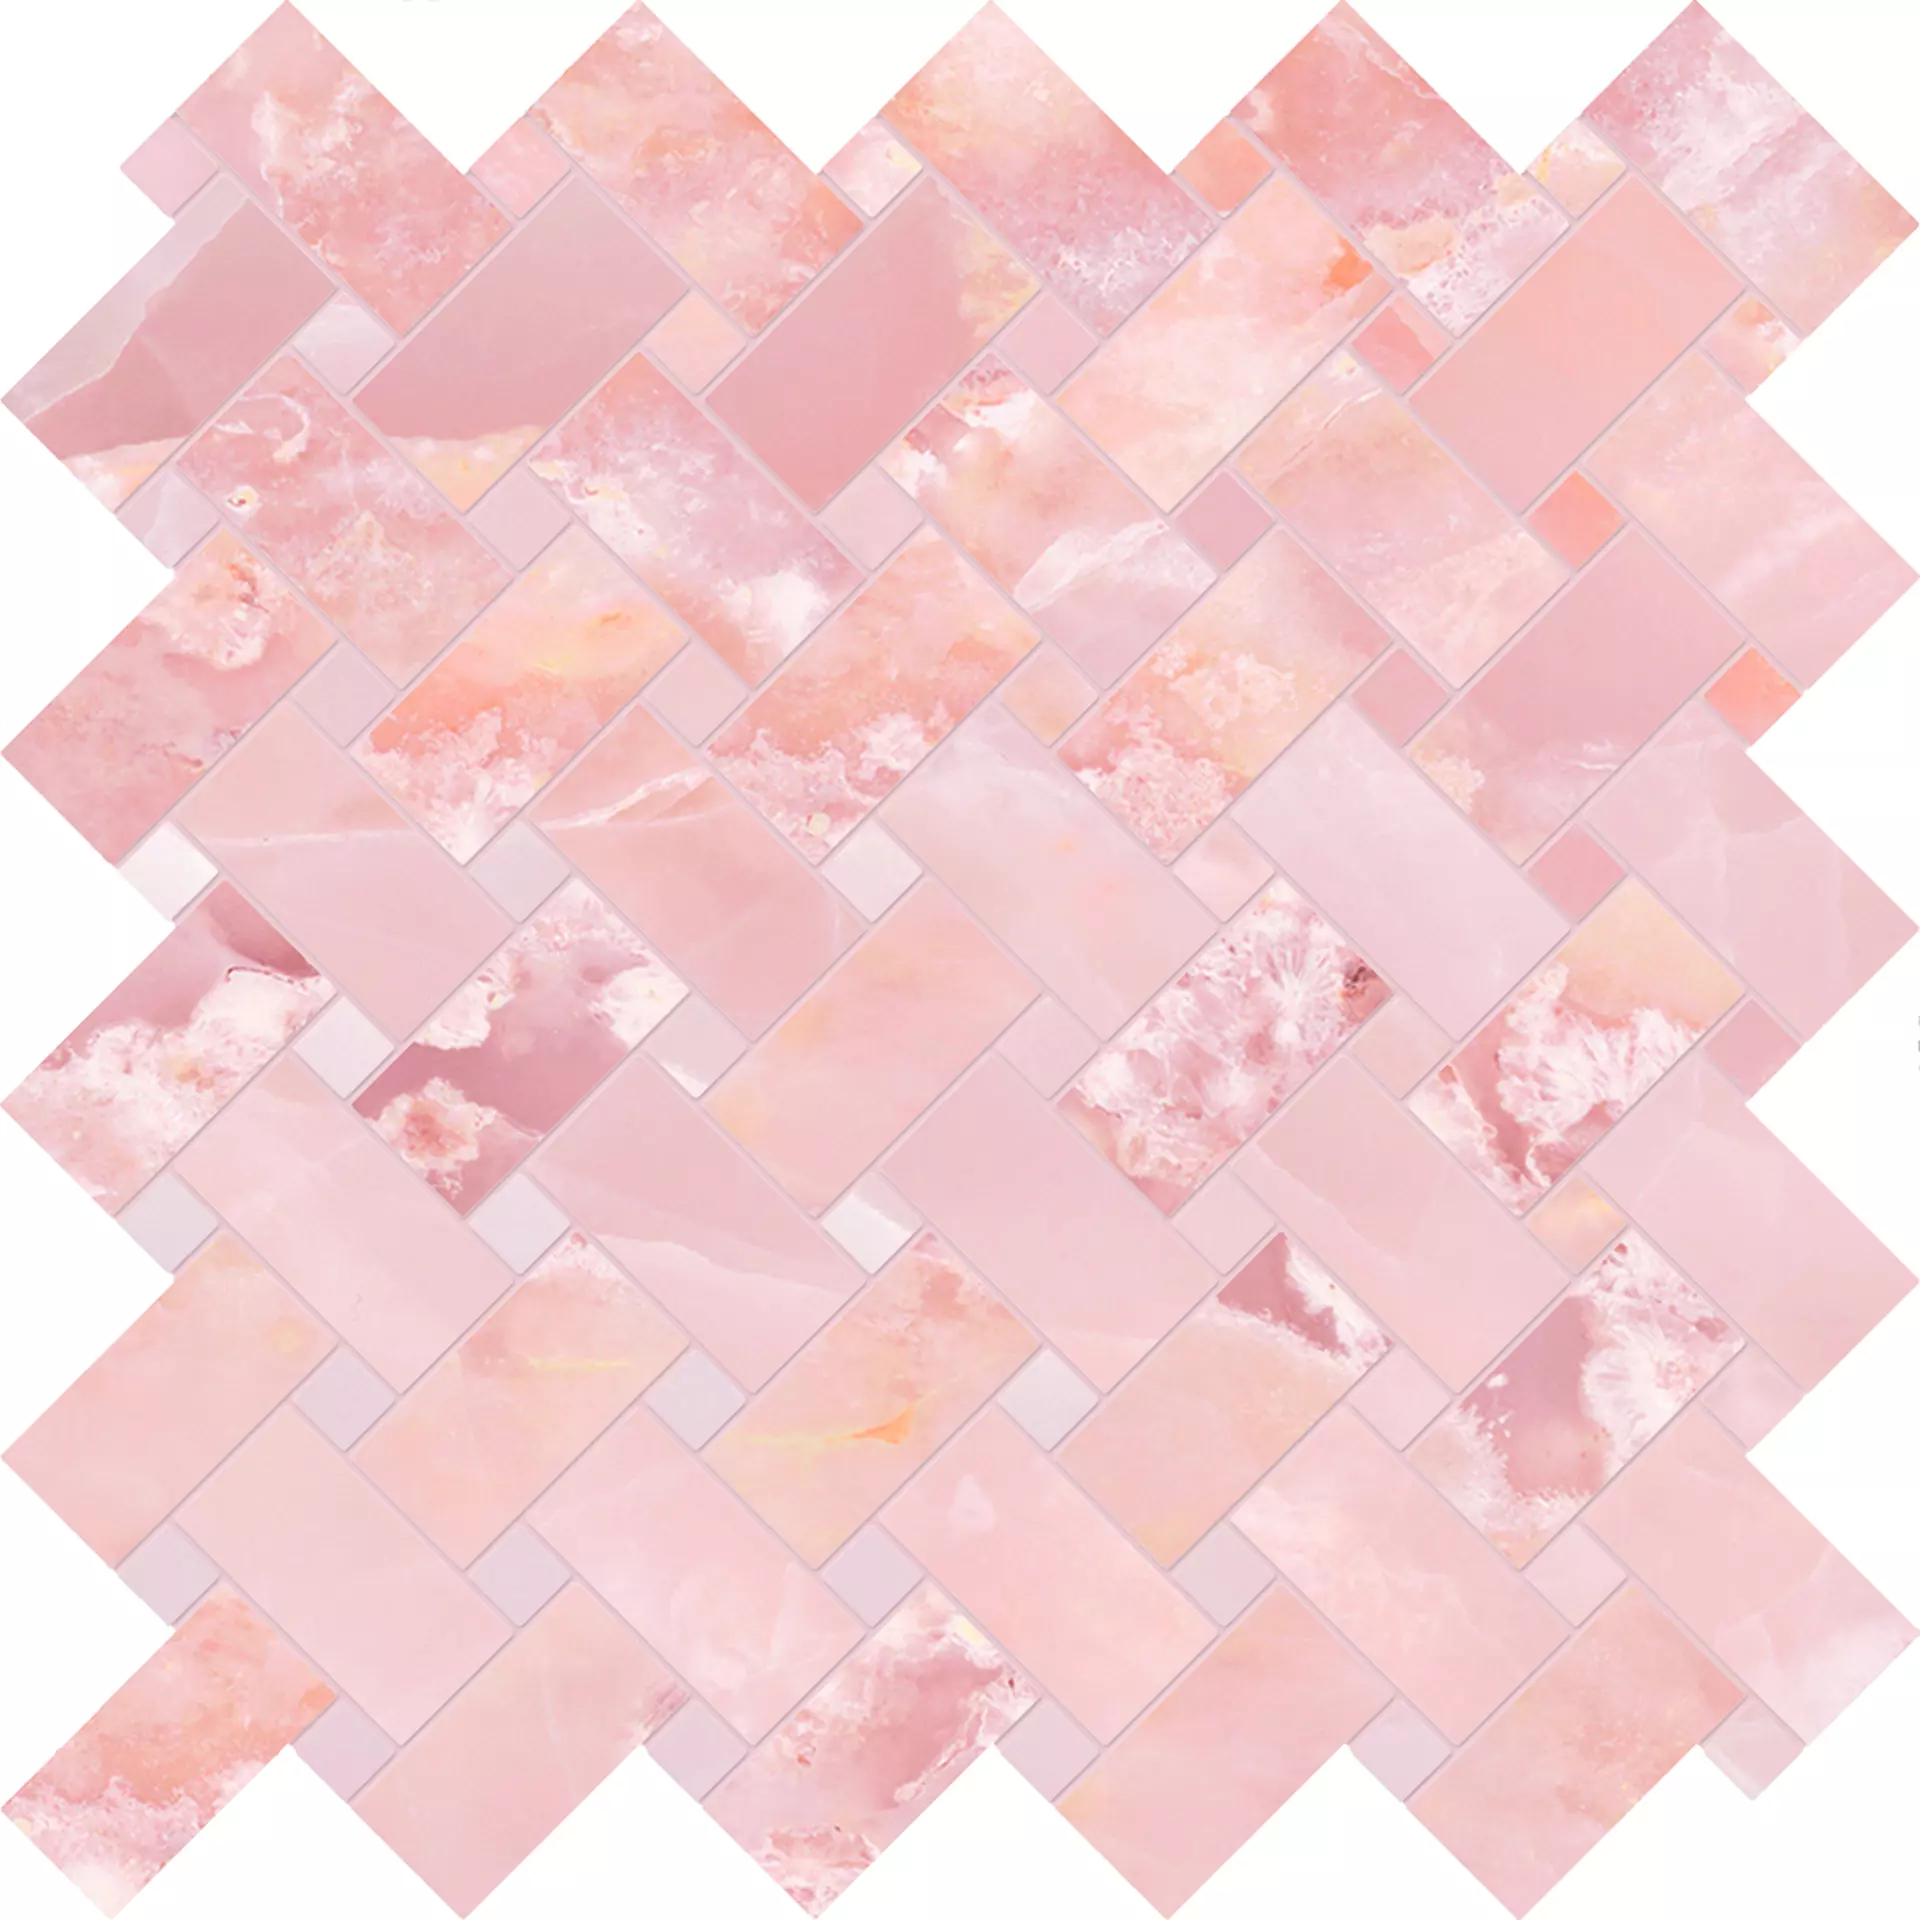 Emilceramica Tele Di Marmo Onyx Pink Silktech Mosaic Intrecci EKZJ 30x30cm 9,5mm